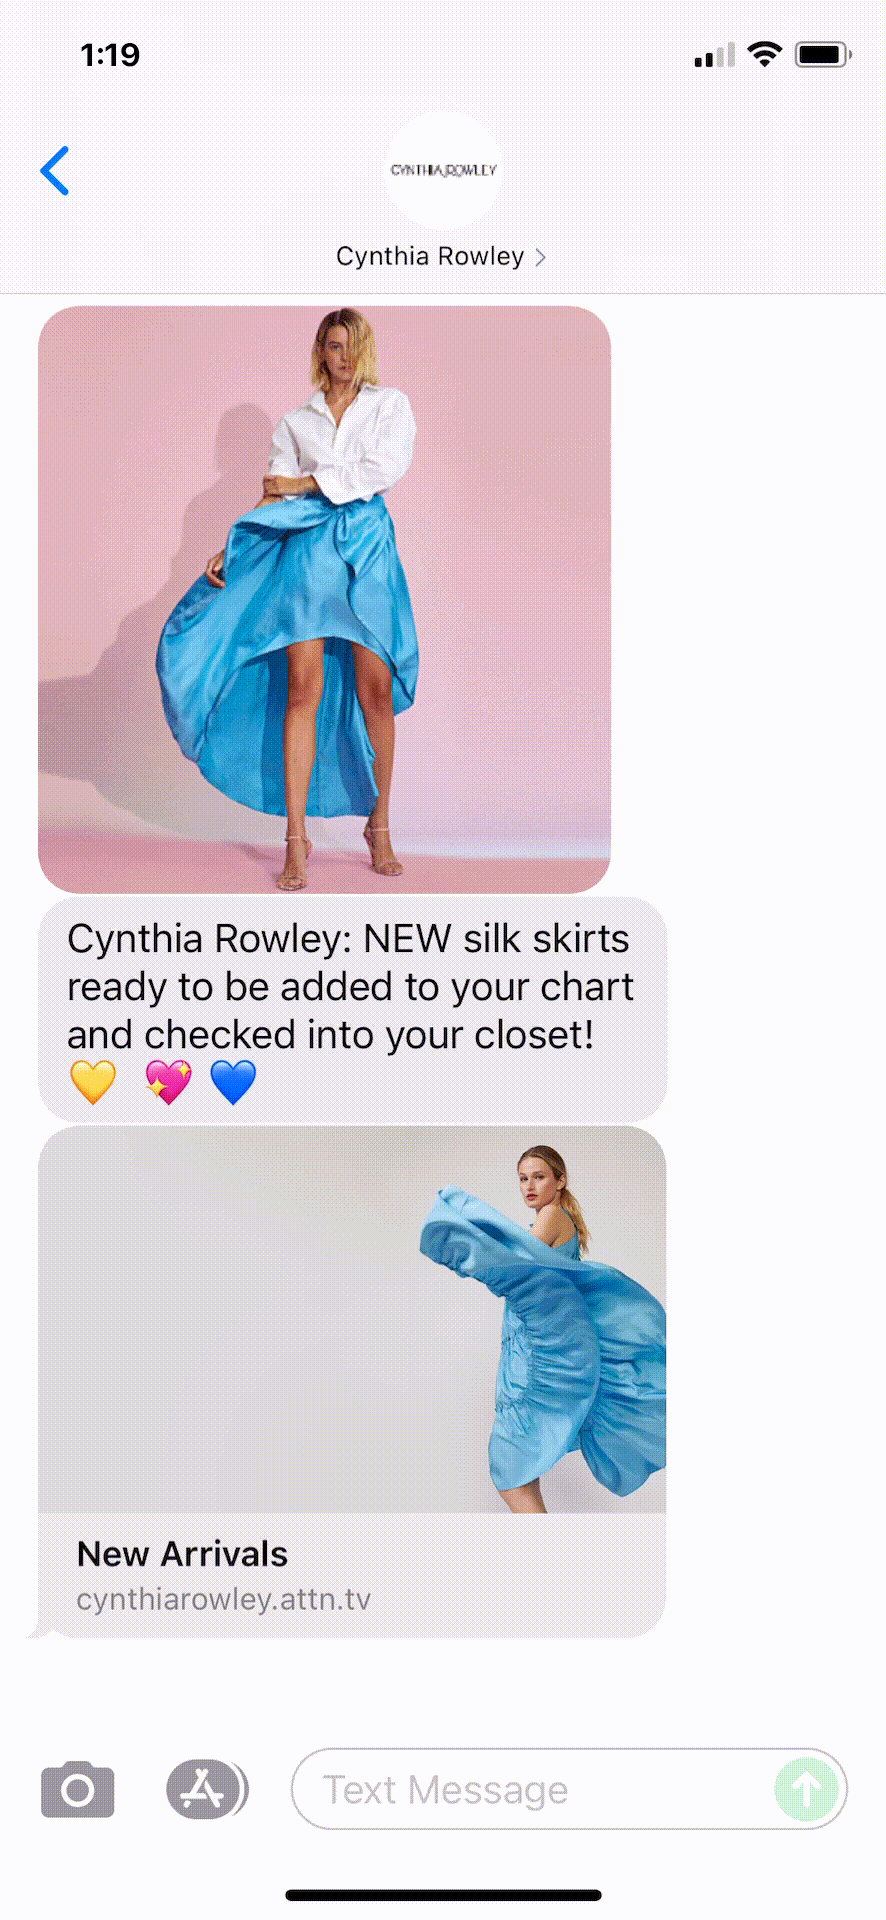 Cynthia-Rowley-Text-Message-Marketing-Example-07.18.2021